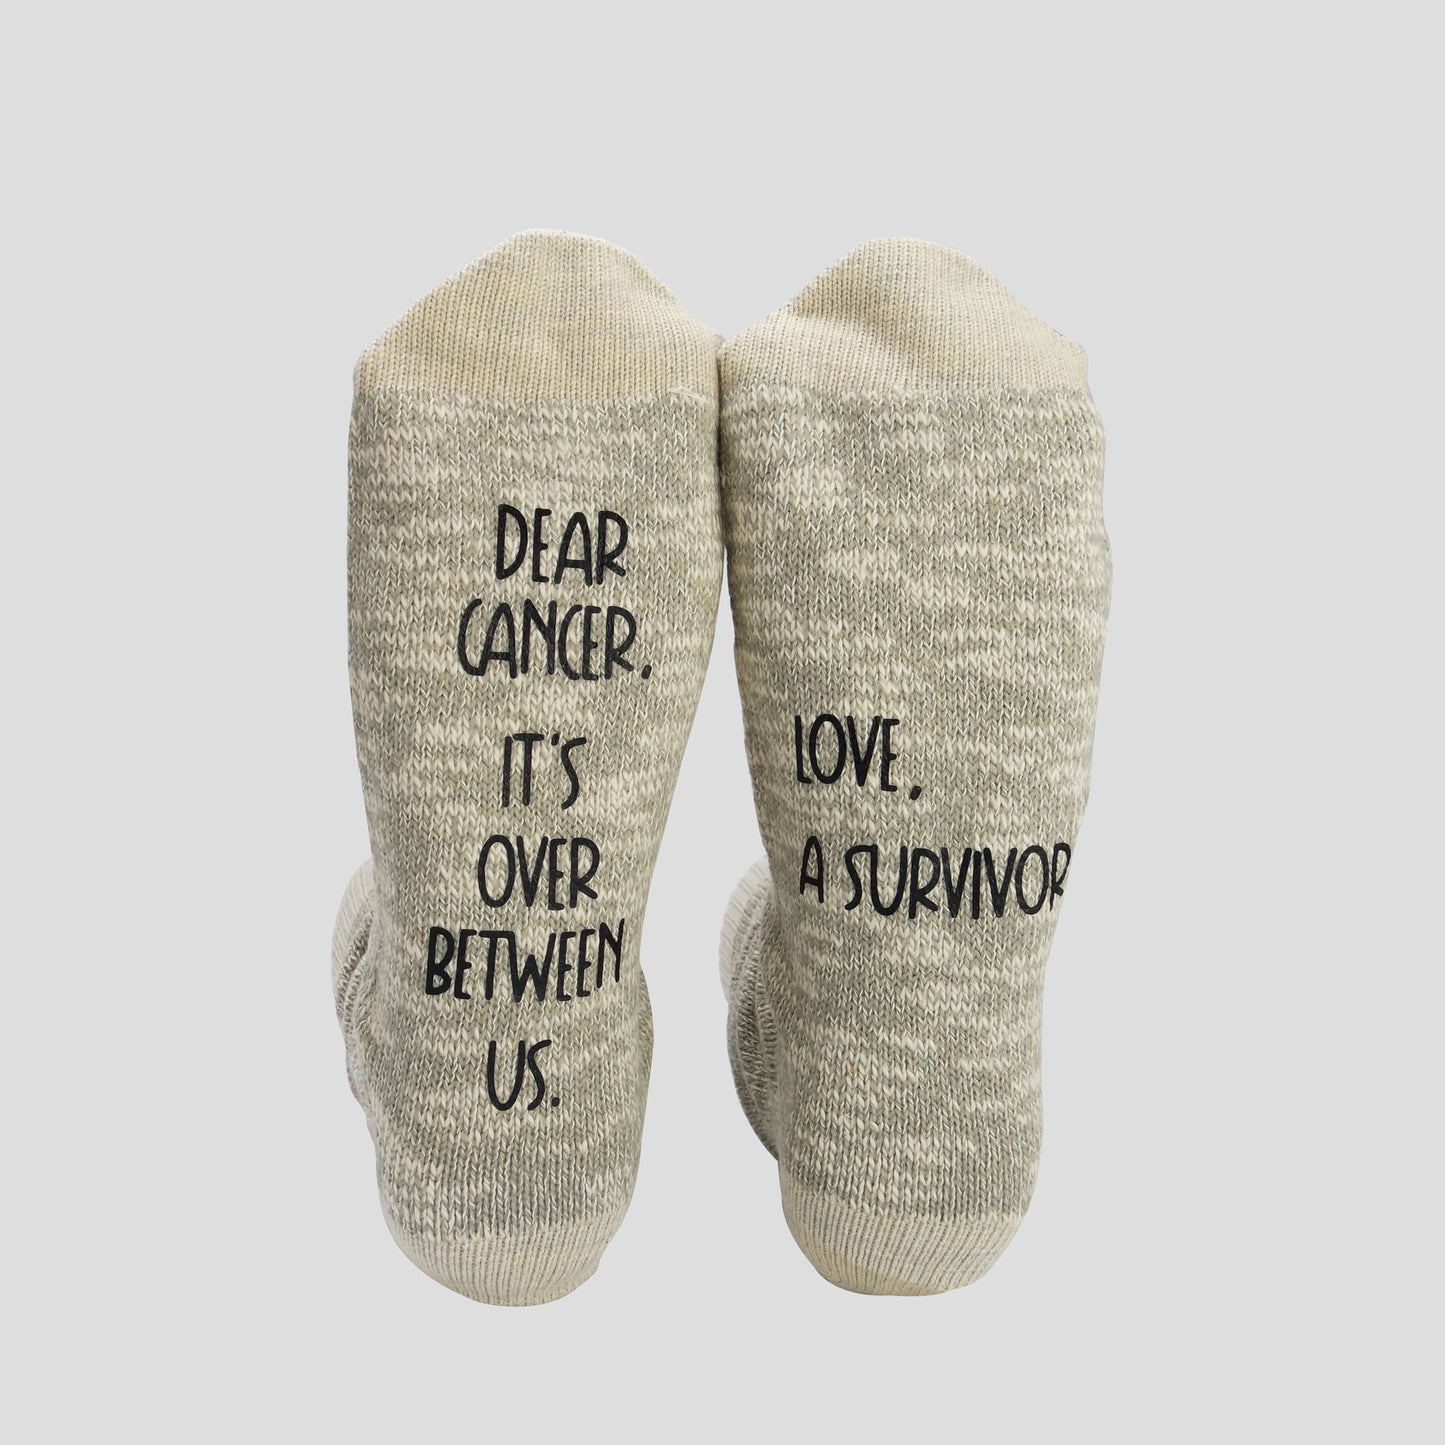 Men's Dear Cancer, It's over between us. / Love, A Survivor" Cancer Letter Socks From A Cancer Fighter